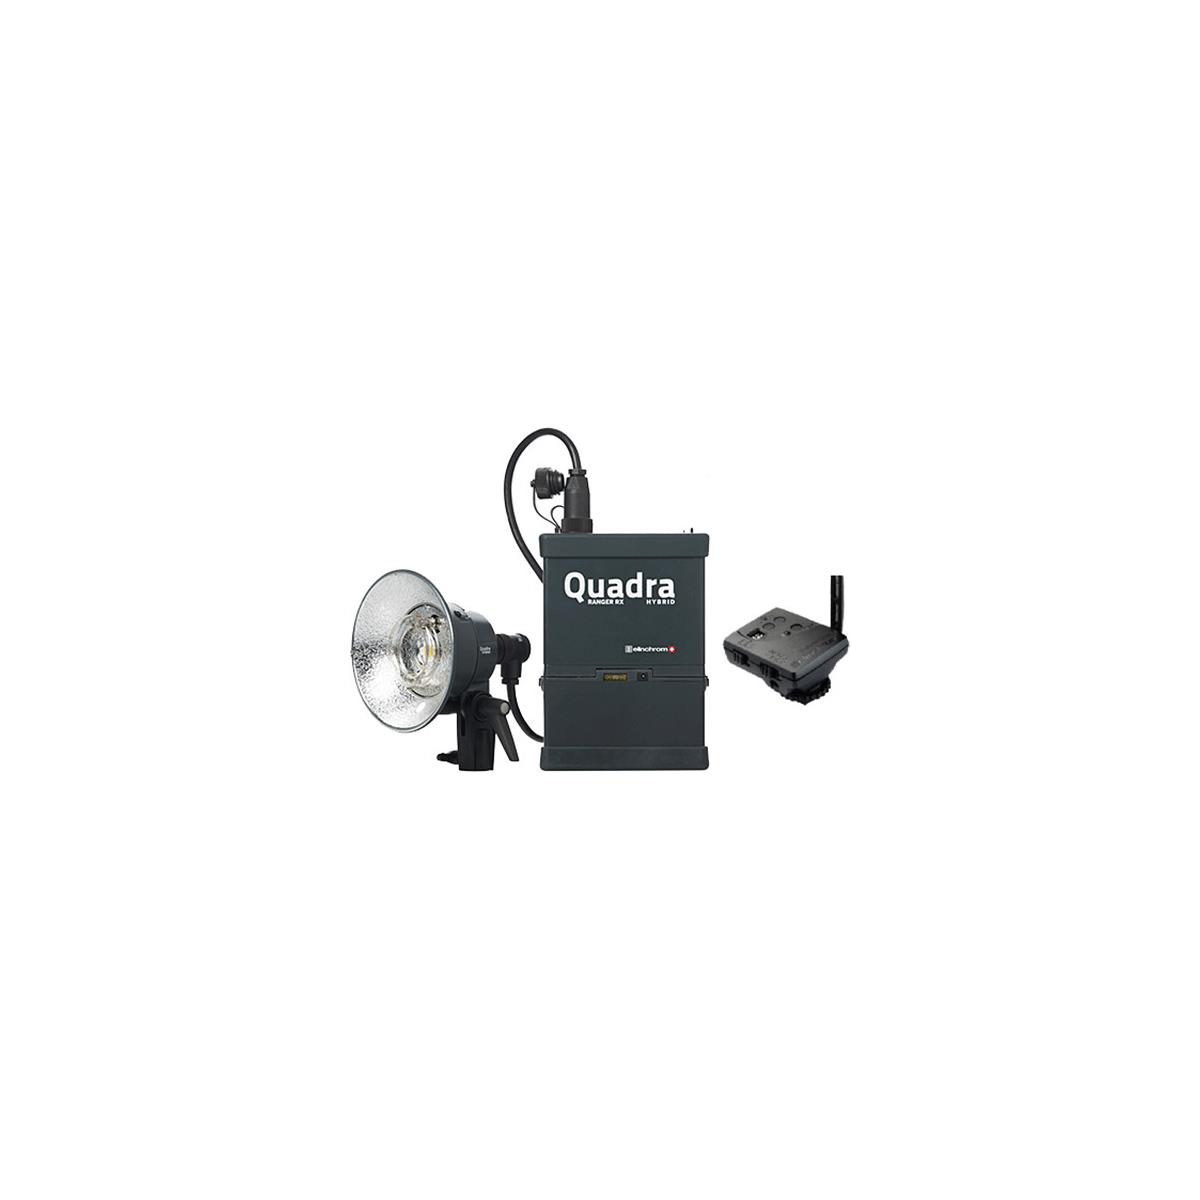 Image of Elinchrom Quadra Hybrid Living Light Kit with Lead-Gel Battery